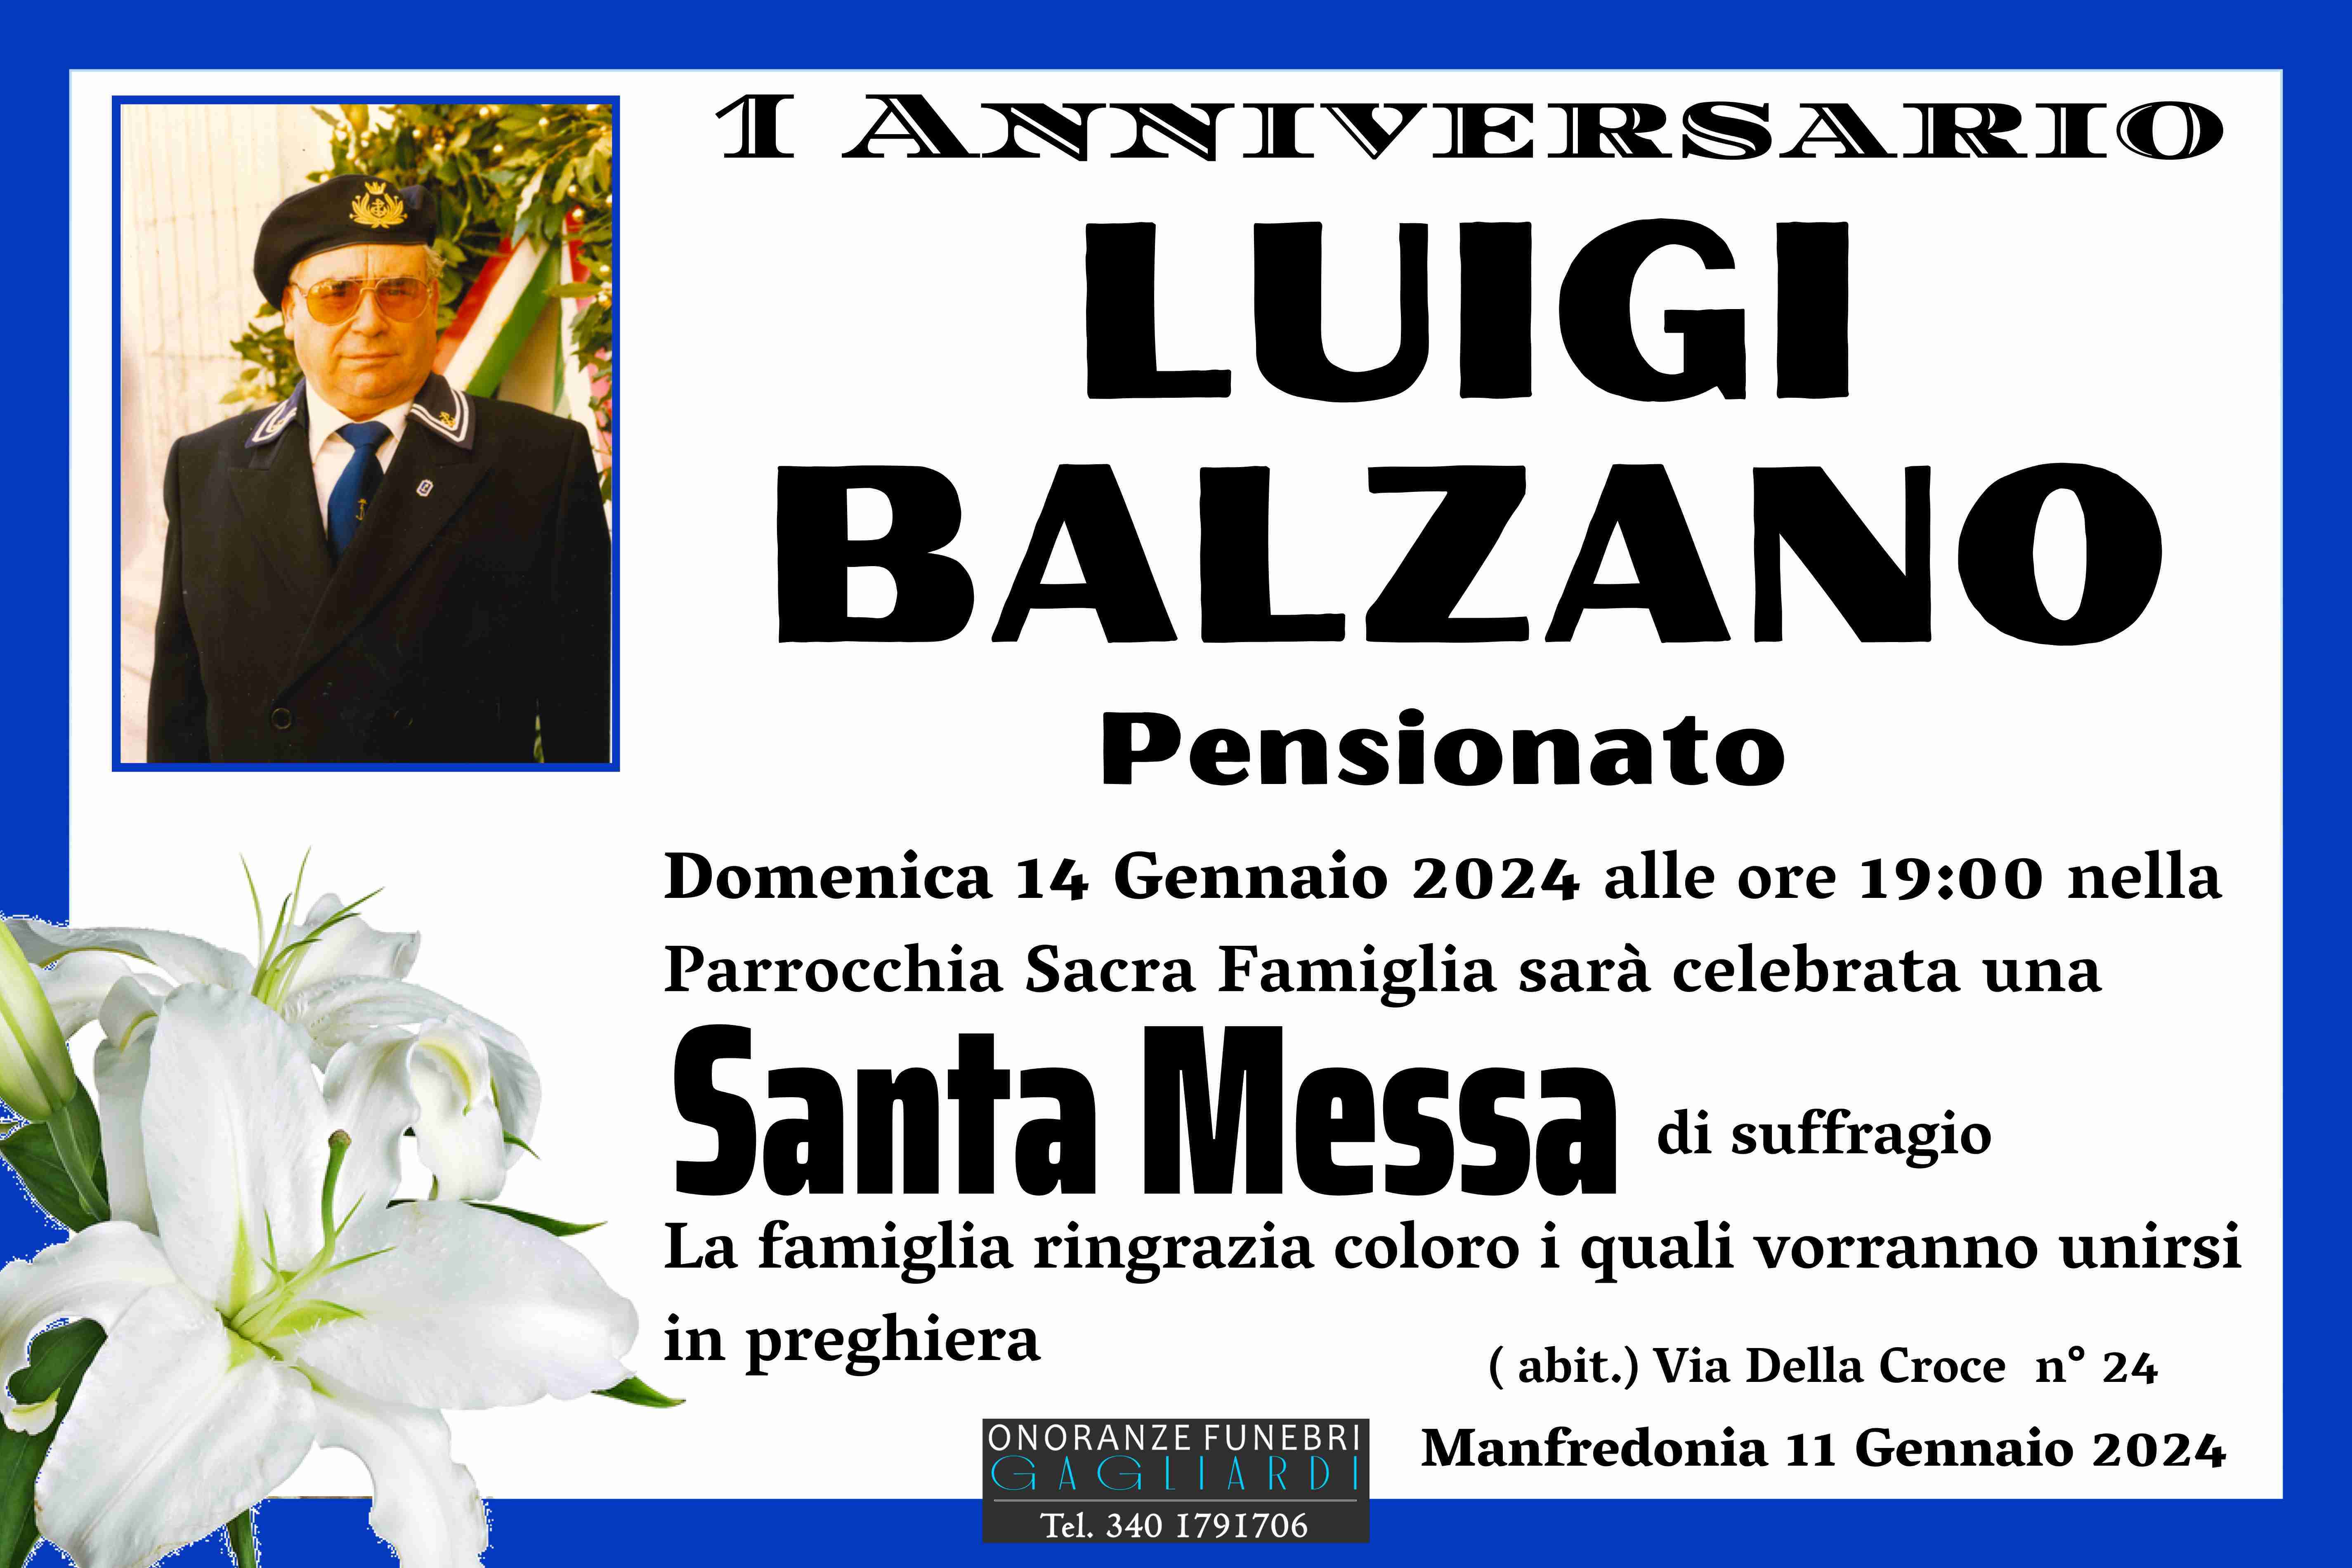 Luigi Balzano